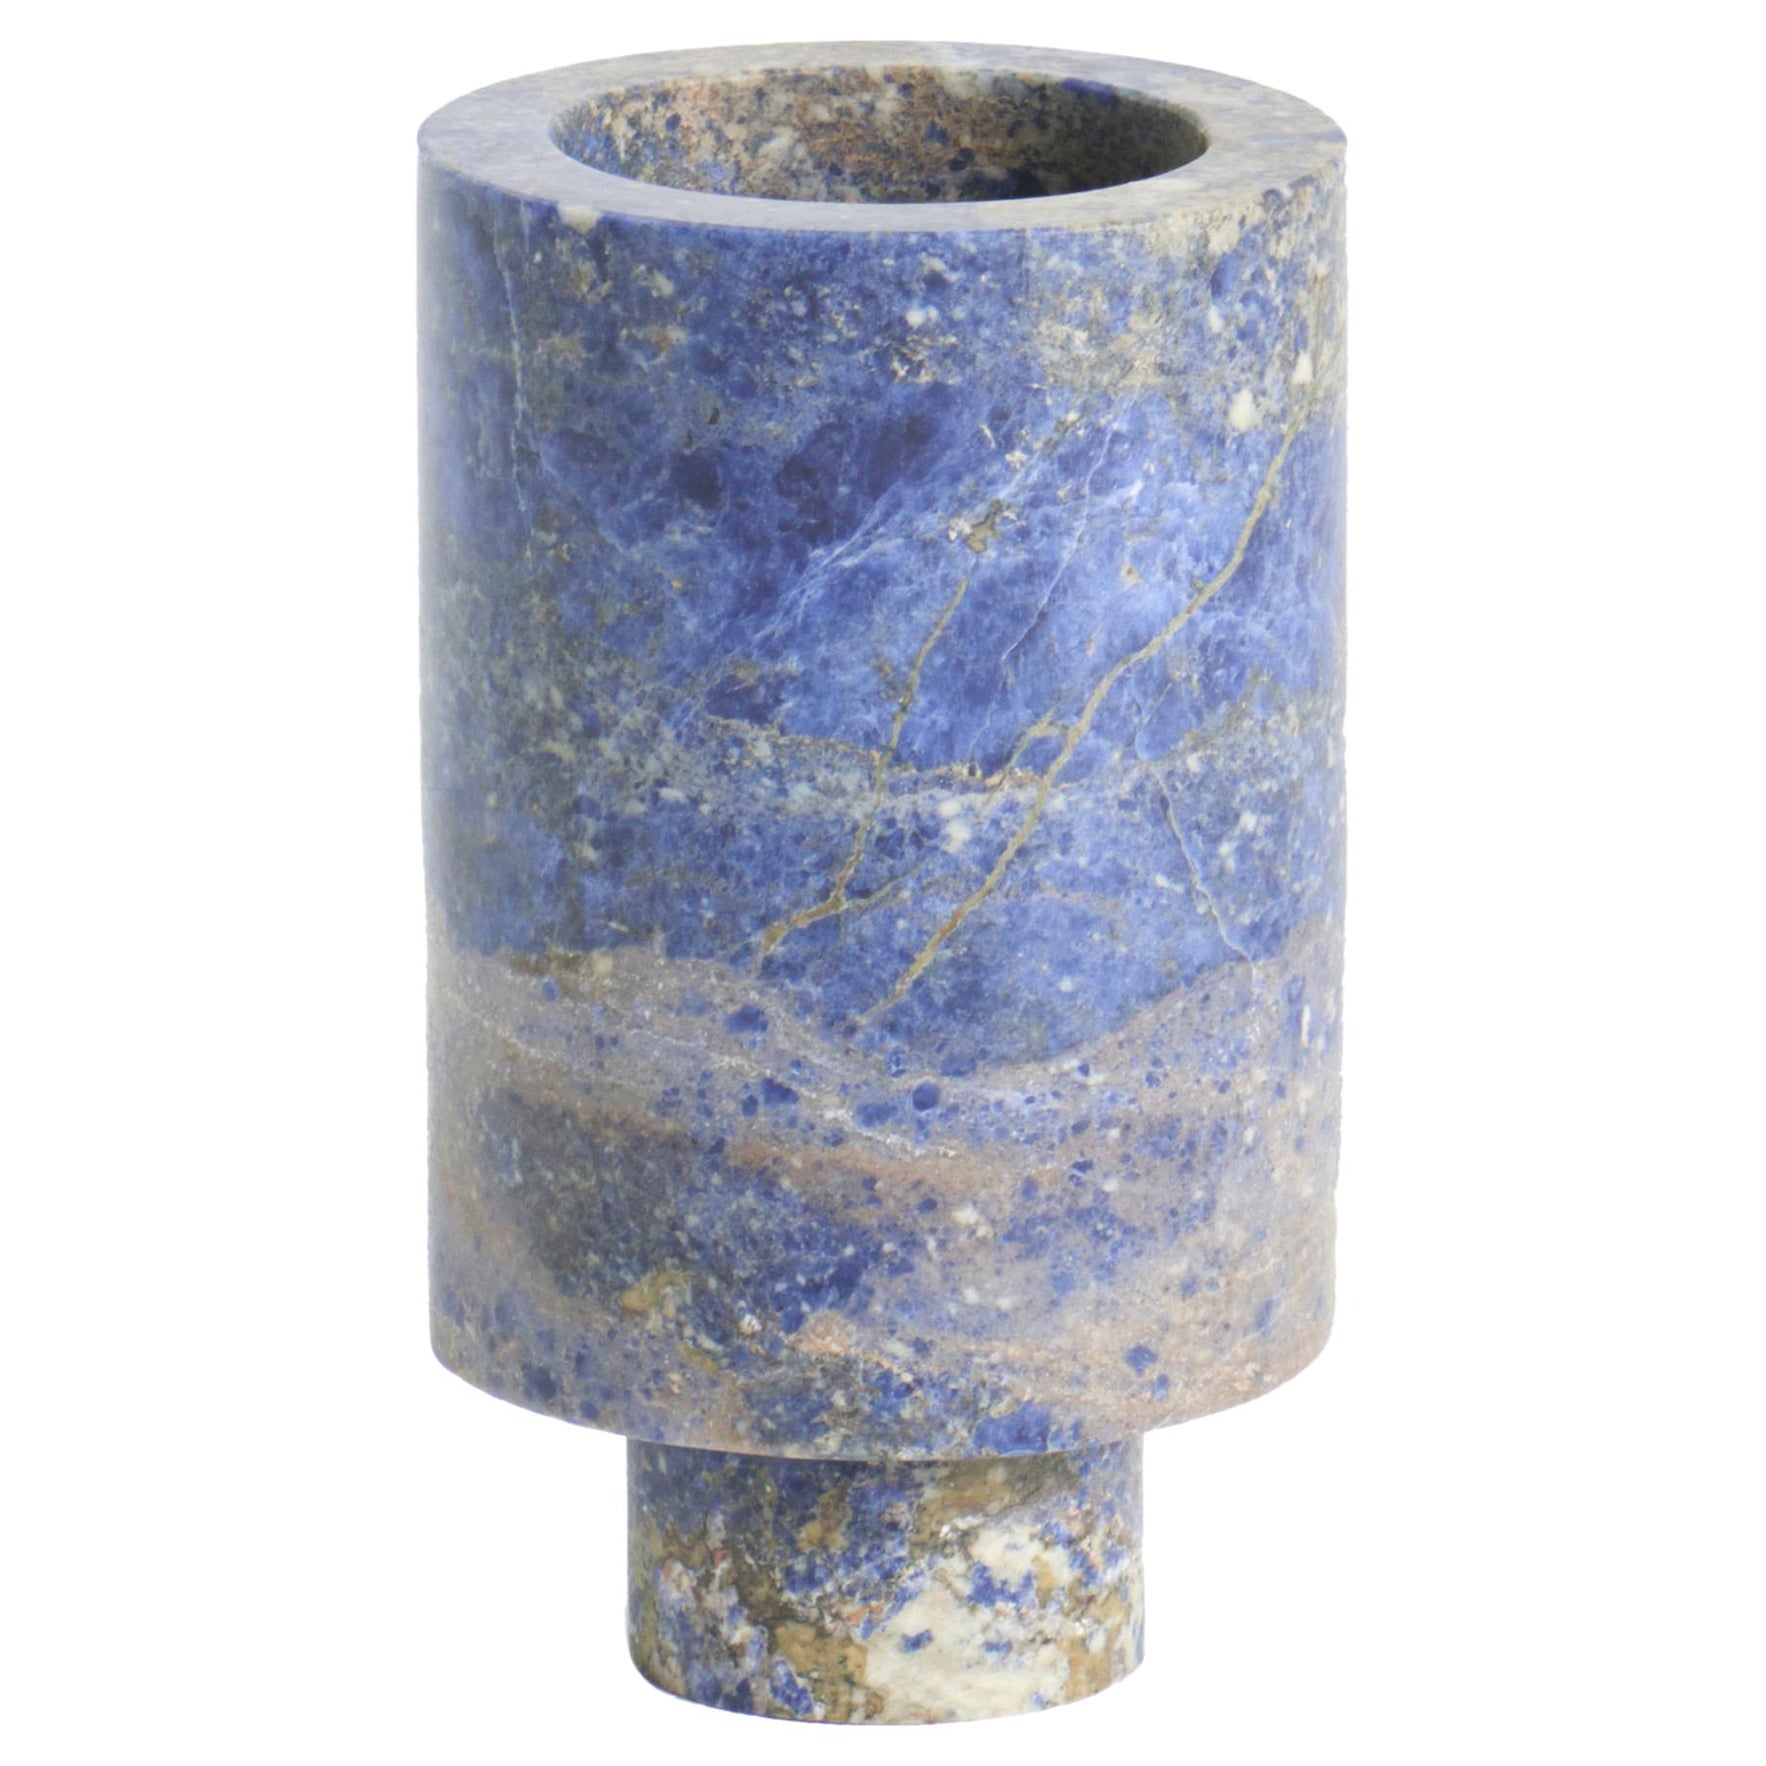 Flower Vase in Blu Marble, by Karen Chekerdjian, Made in Italy - Stock